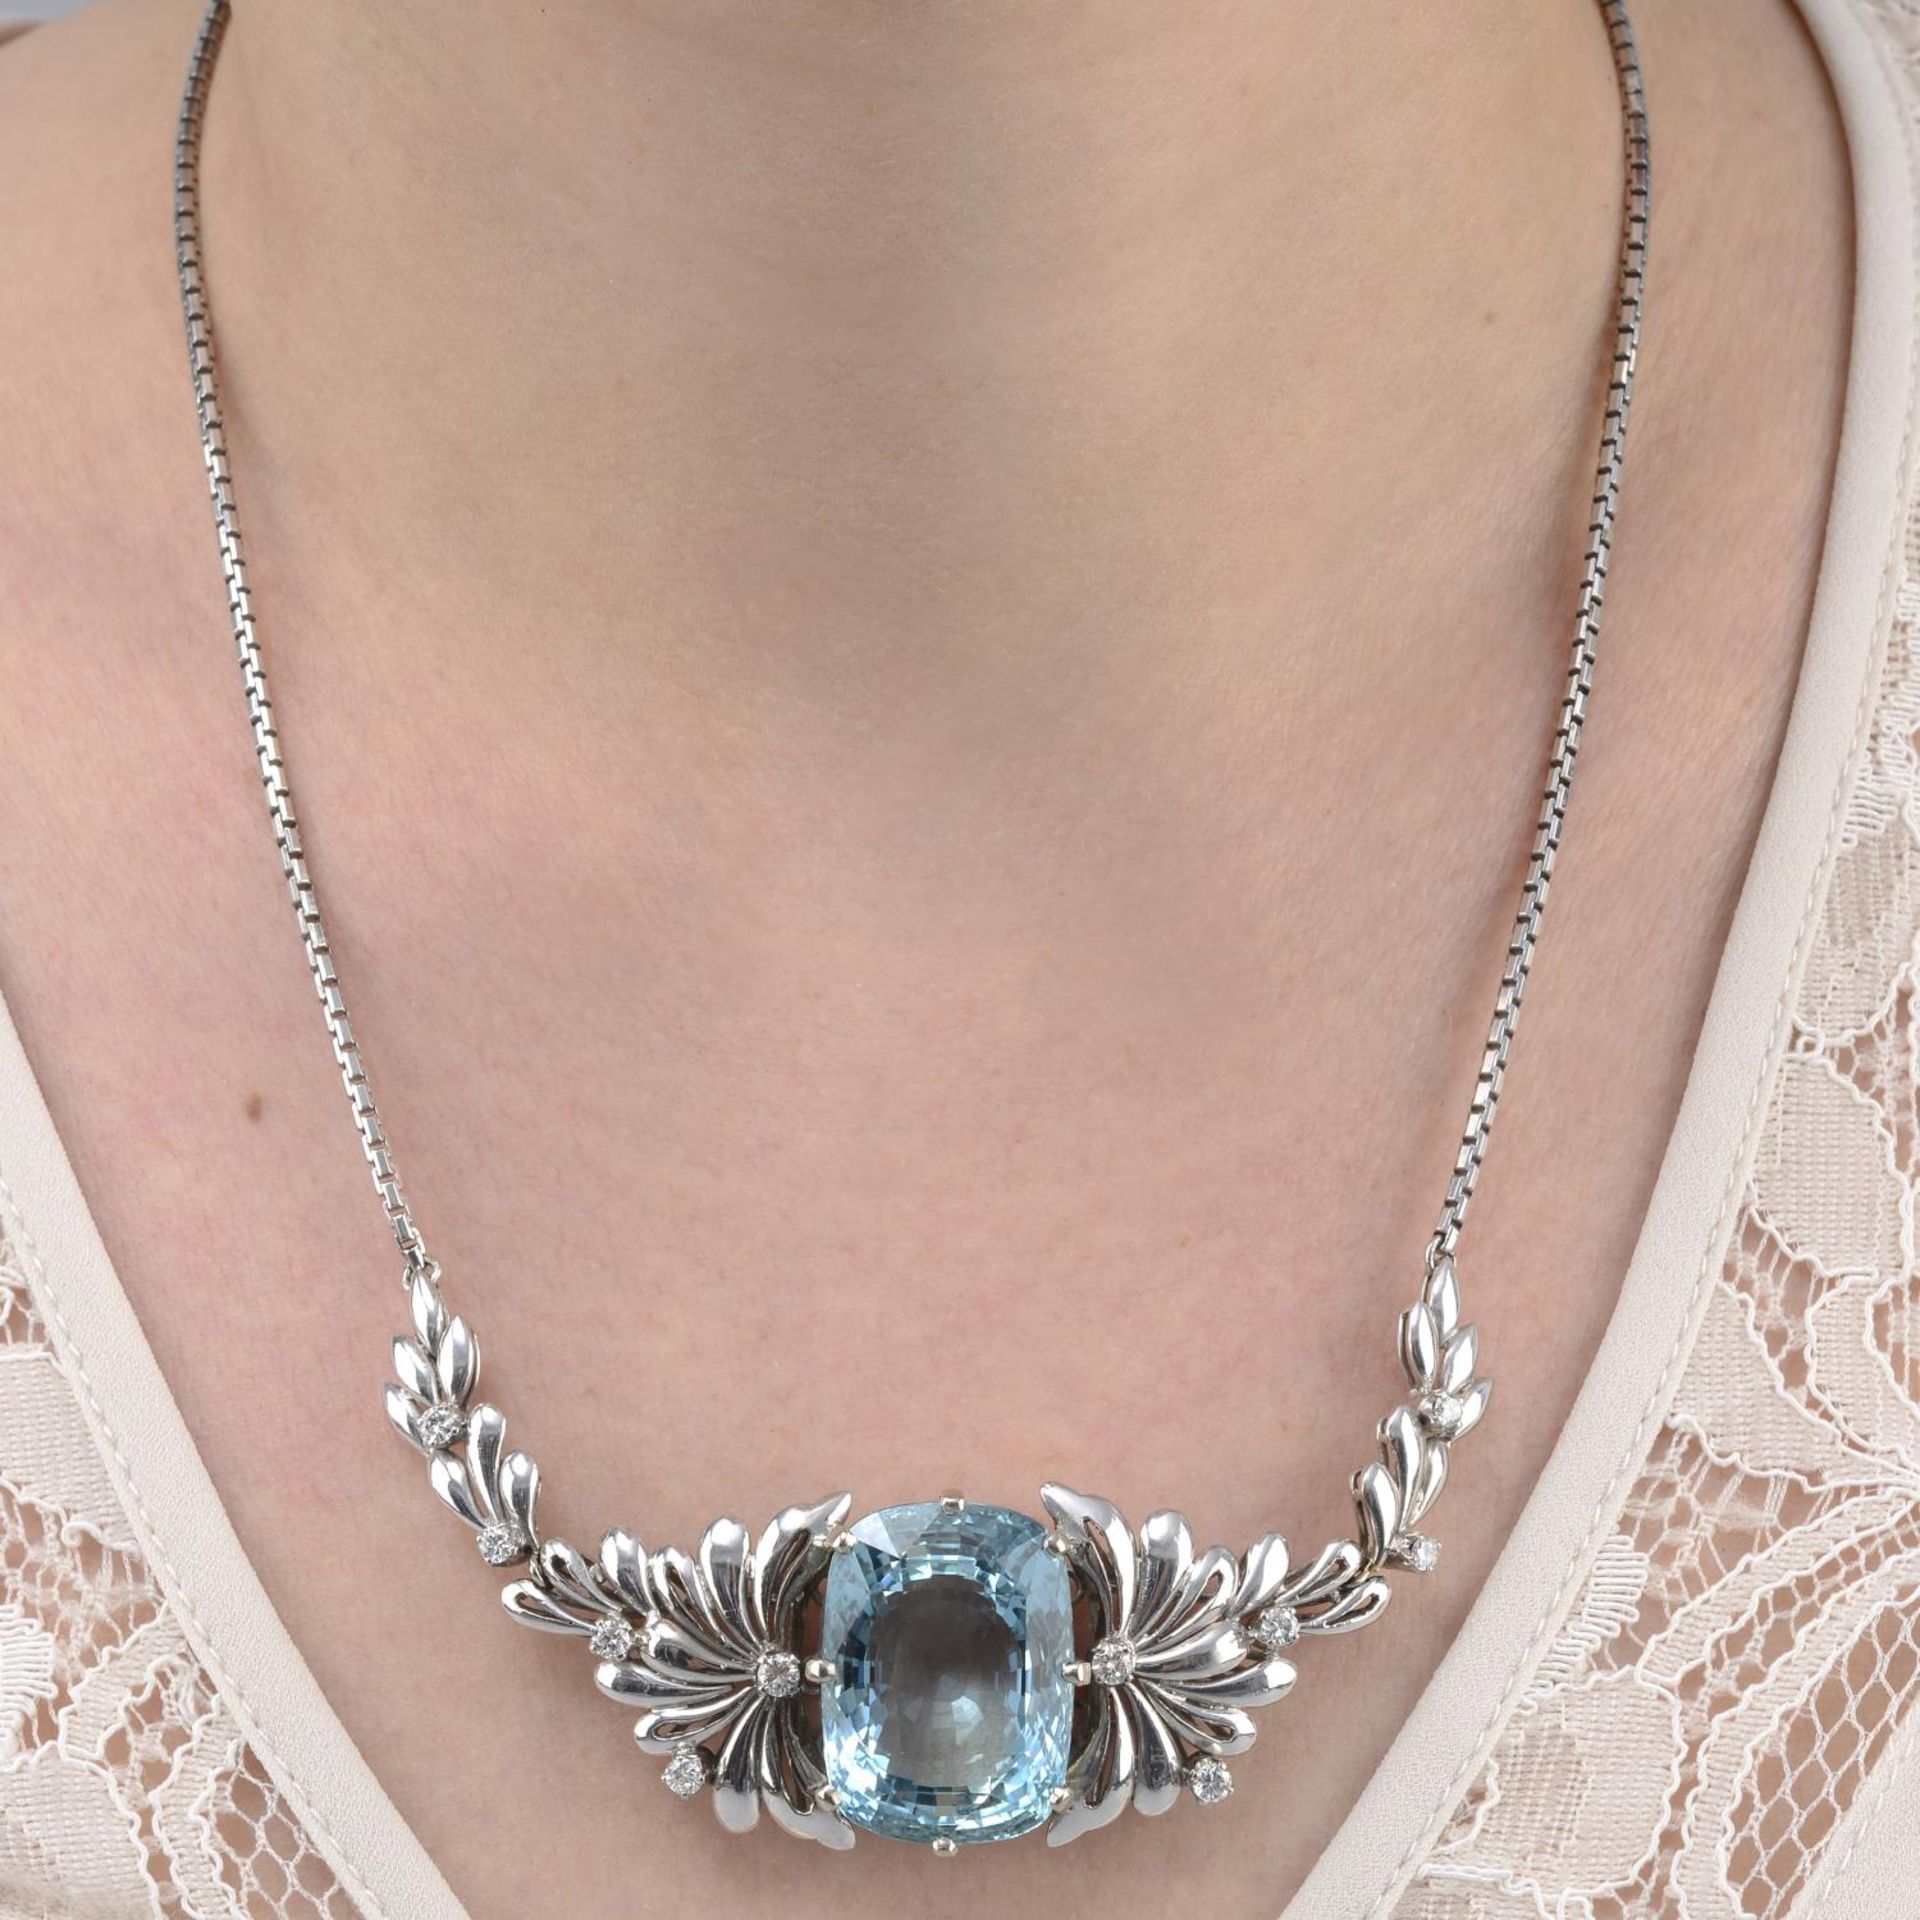 An aquamarine and brilliant-cut diamond necklace.Calculated aquamarine weight 38.02cts,